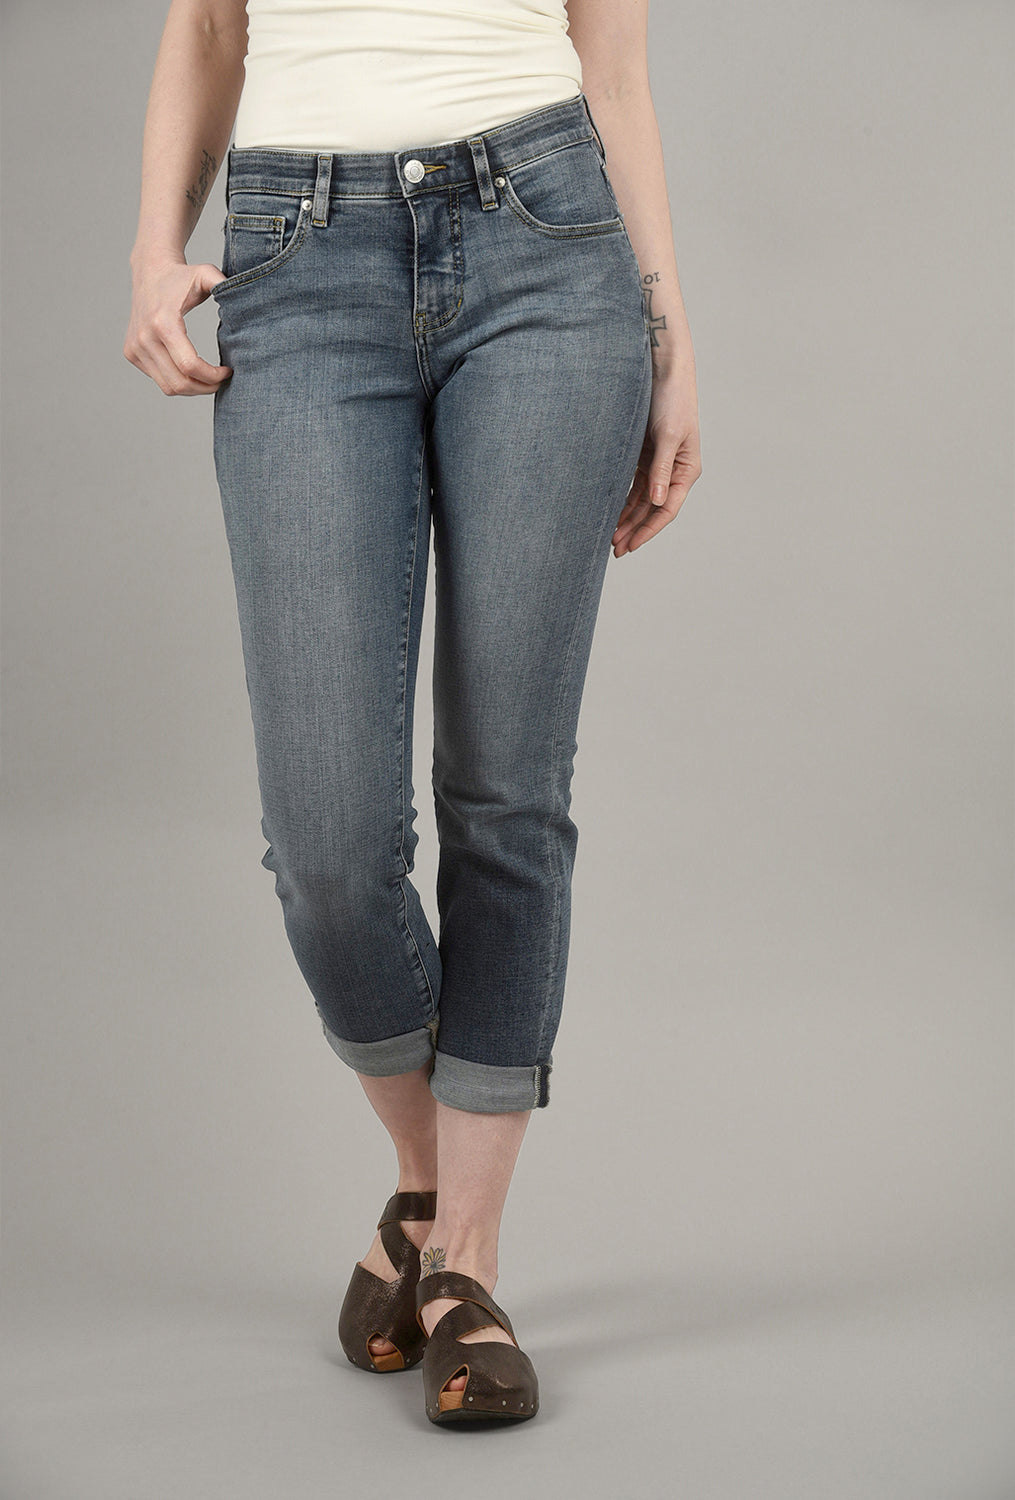 Carter Girlfriend Jeans, Vintage